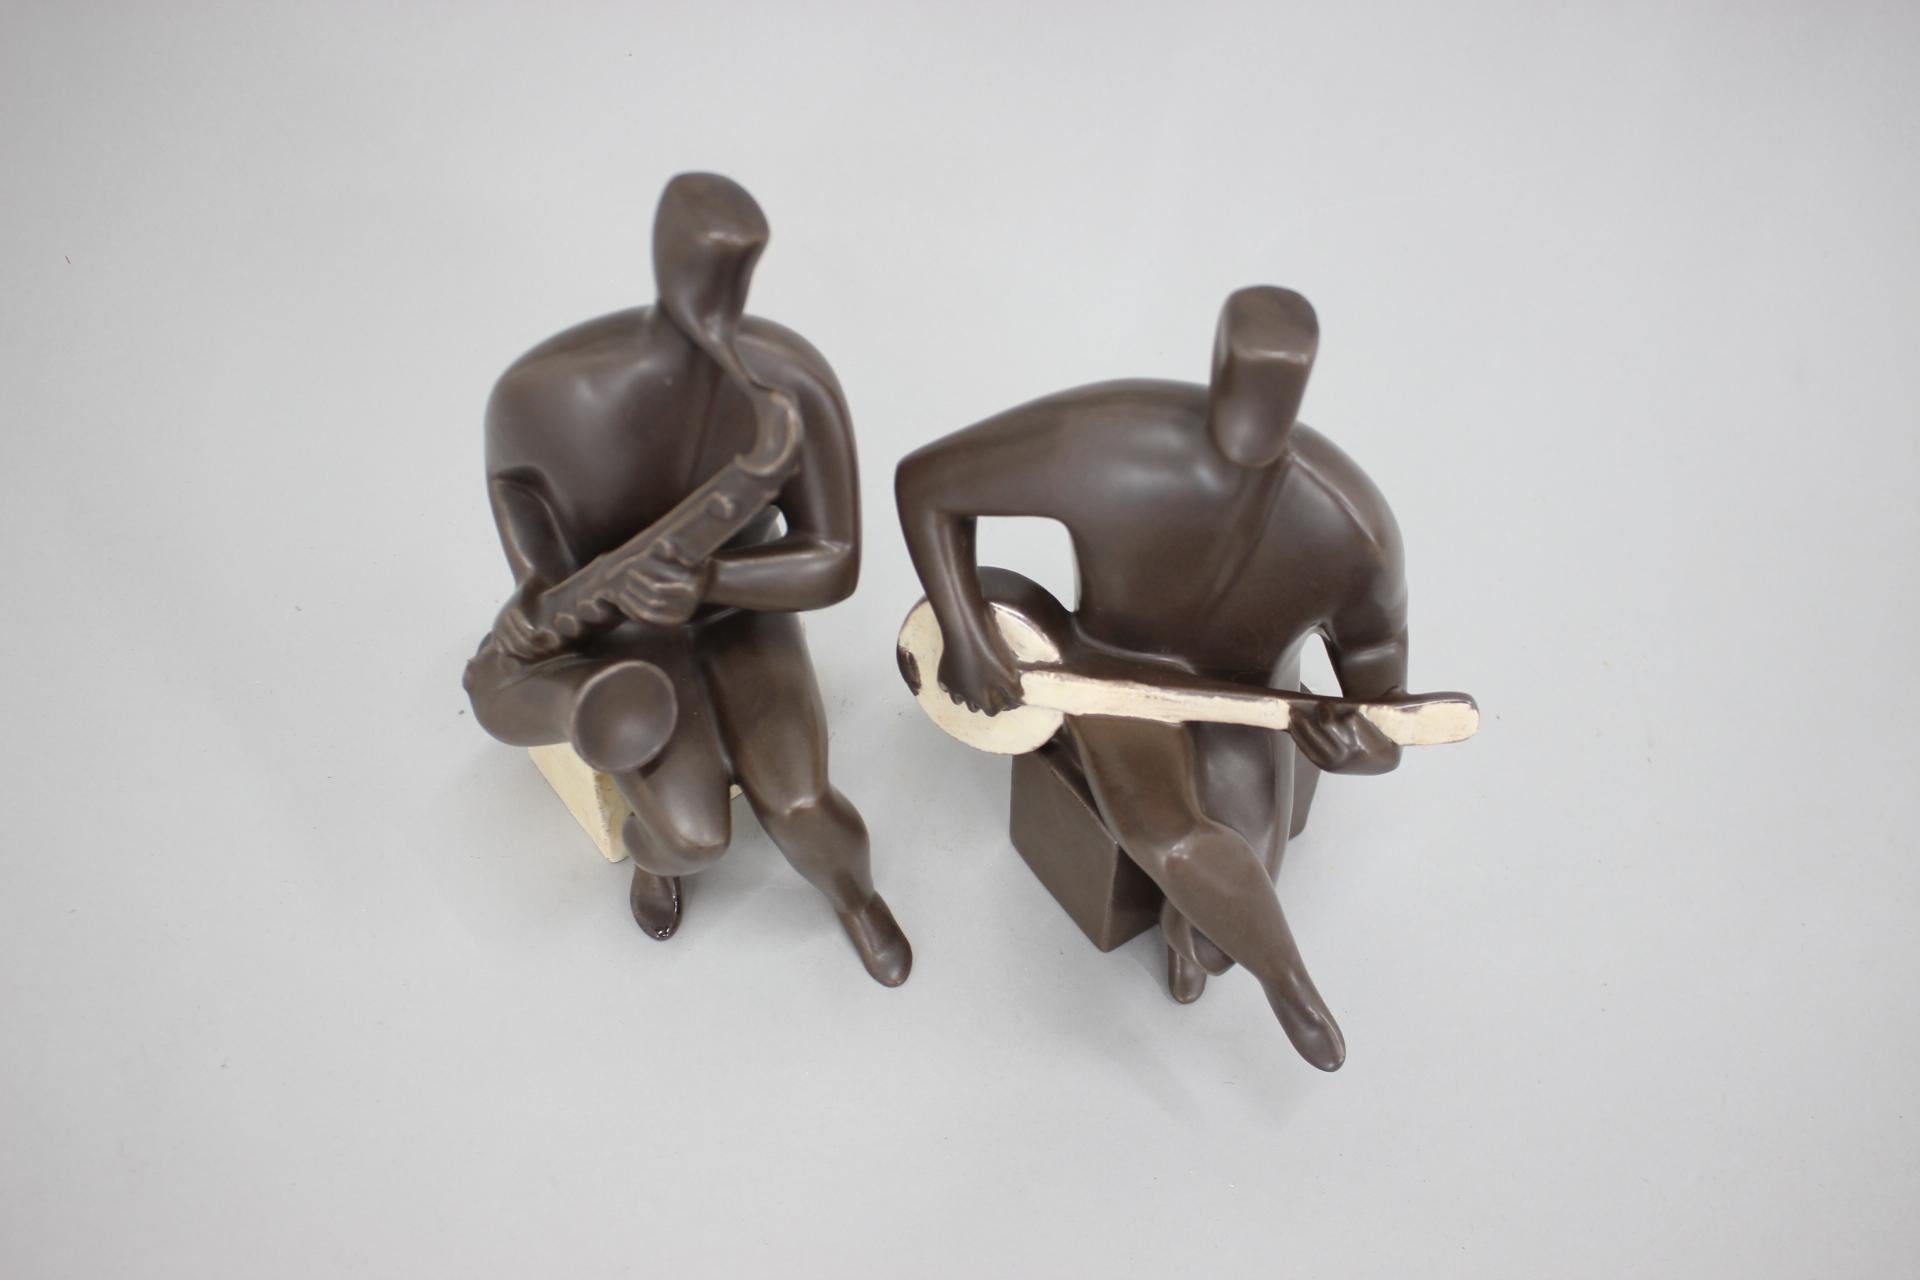 1970s Pair of Ceramic Figurines of Musicians, Czechoslovakia For Sale 1